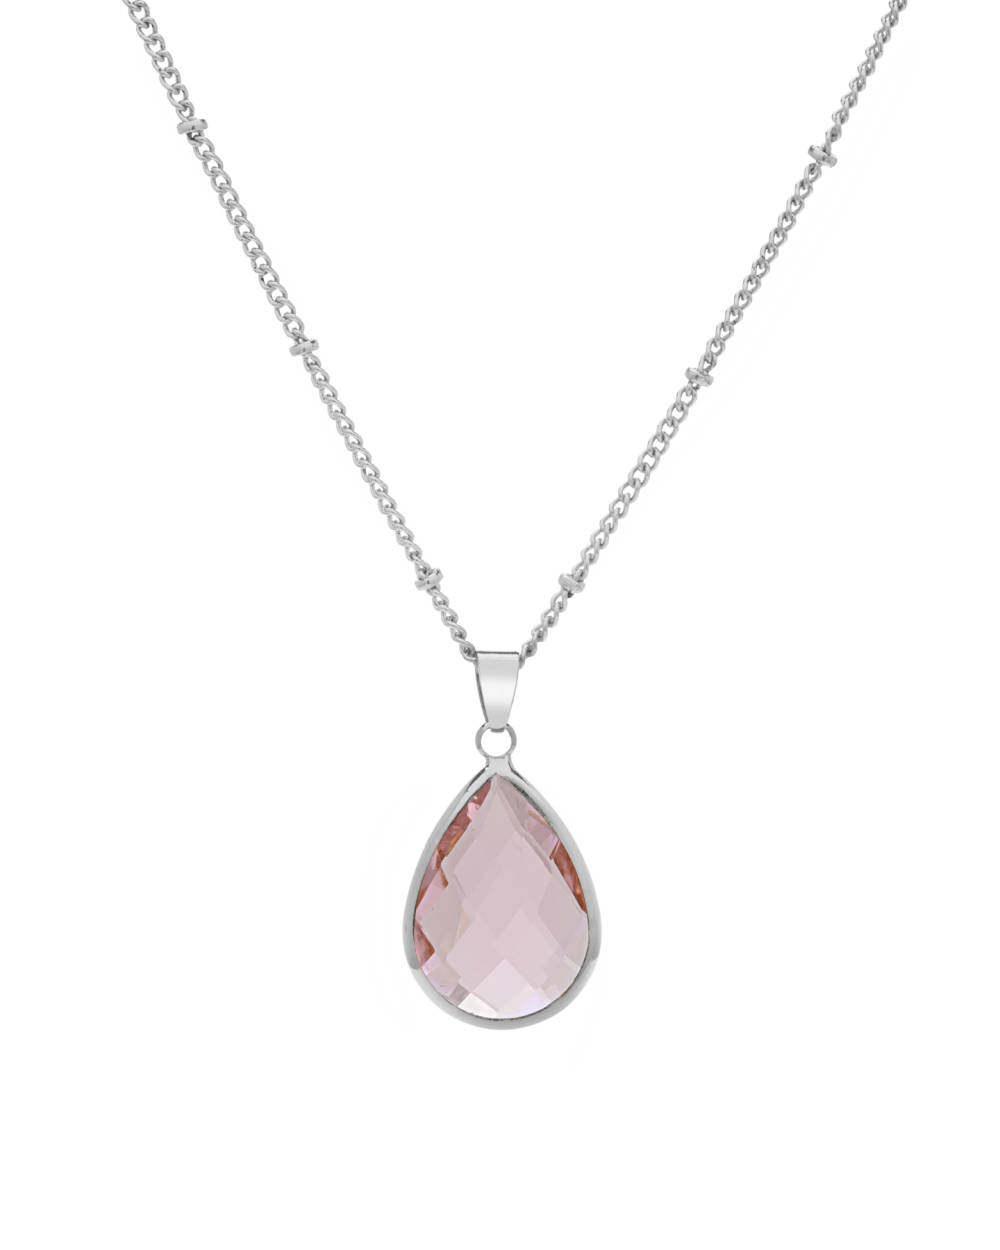 Silvertone October Light Pink Birthstone Teardrop Necklace - MICALLA